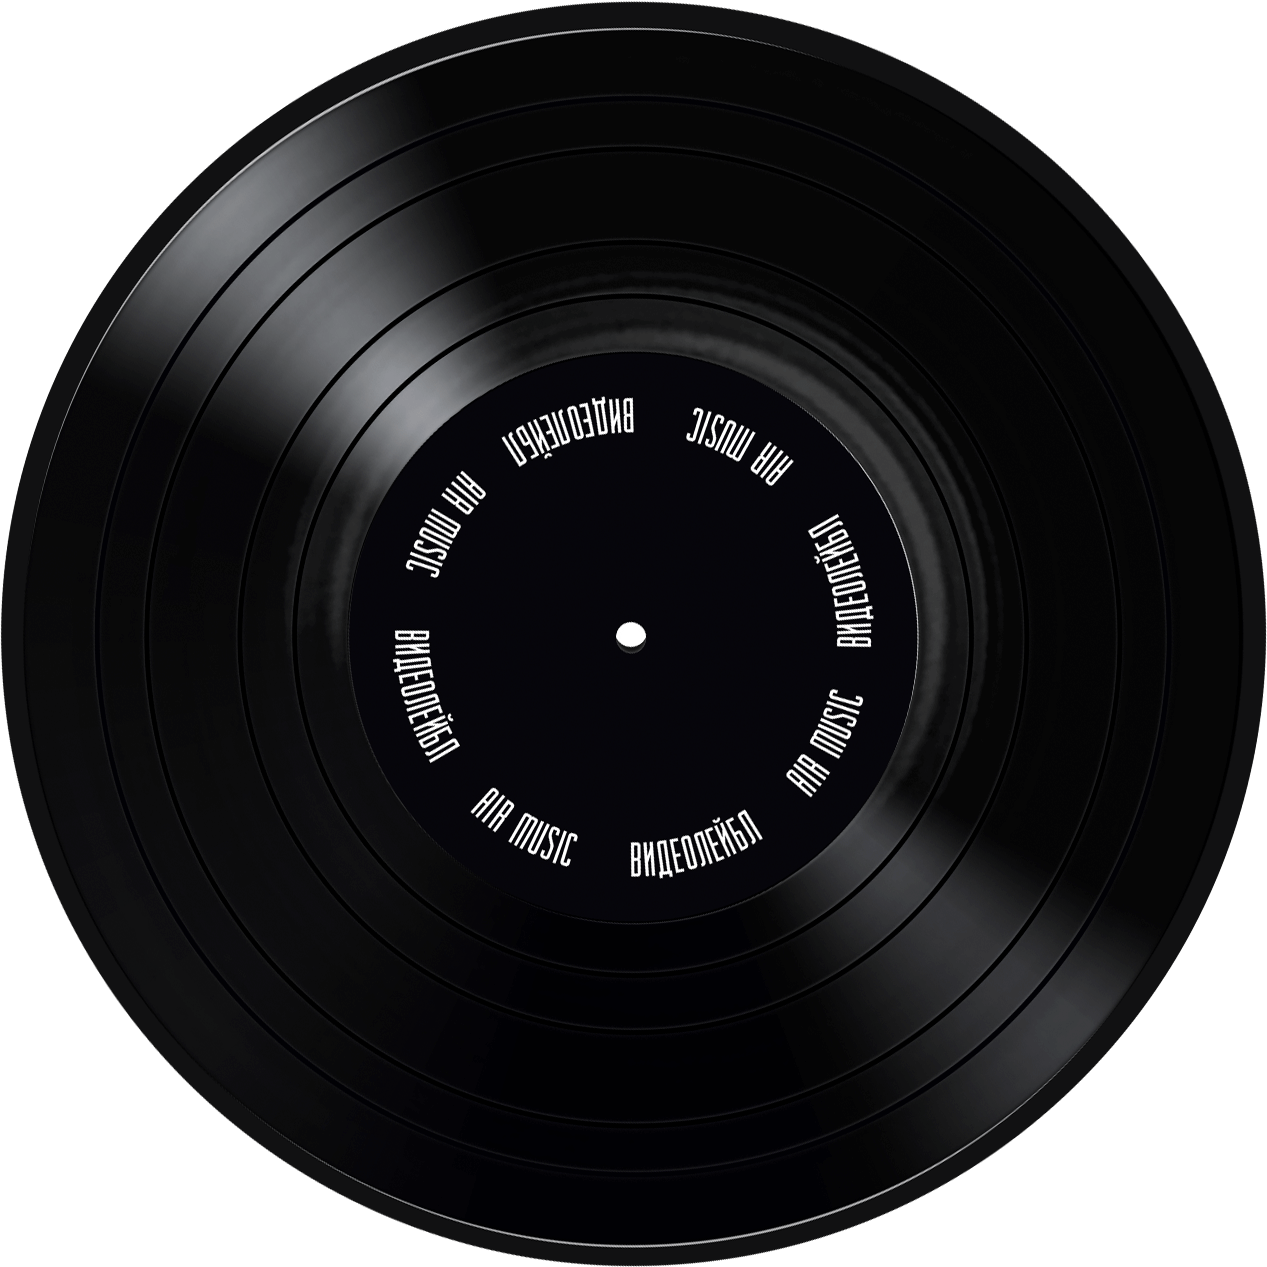 Gramophone Vinyl Lp Record Png Transparent Clip Art Image Gallery Images